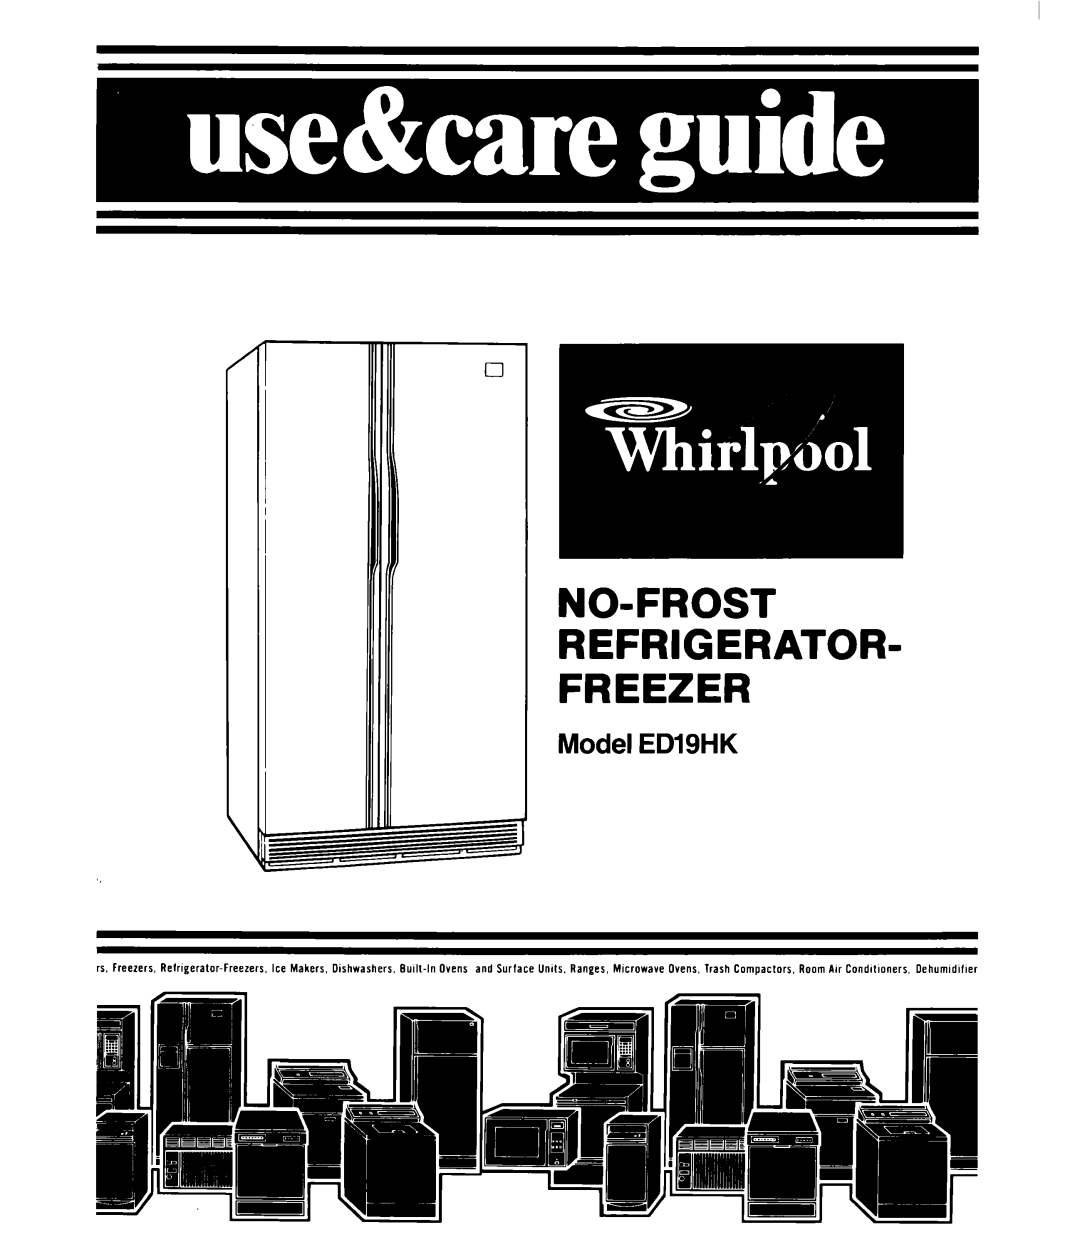 Whirlpool ED19HK manual No-Frost Refrigerator Freezer, Model EDISHK 